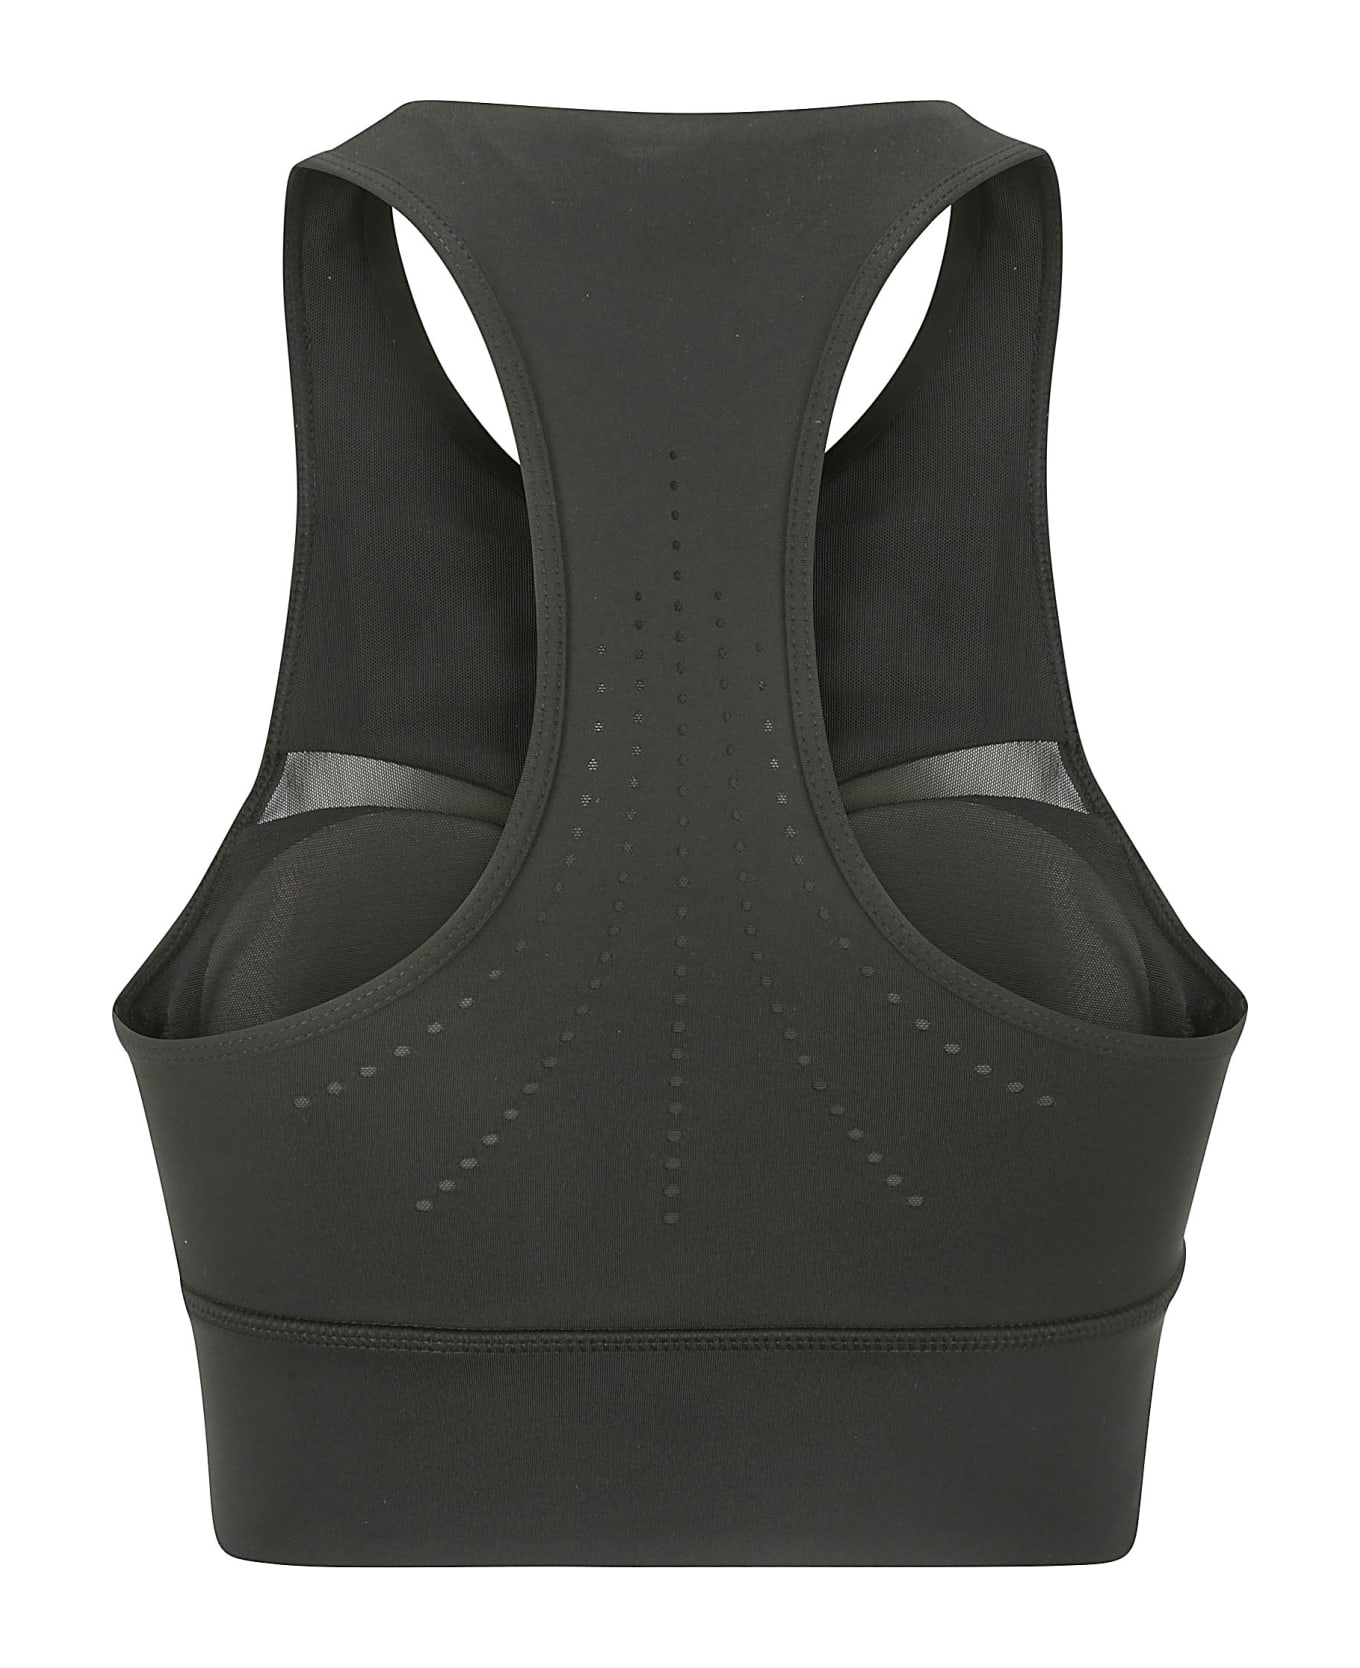 Adidas by Stella McCartney Truepurpose Training - BLACK